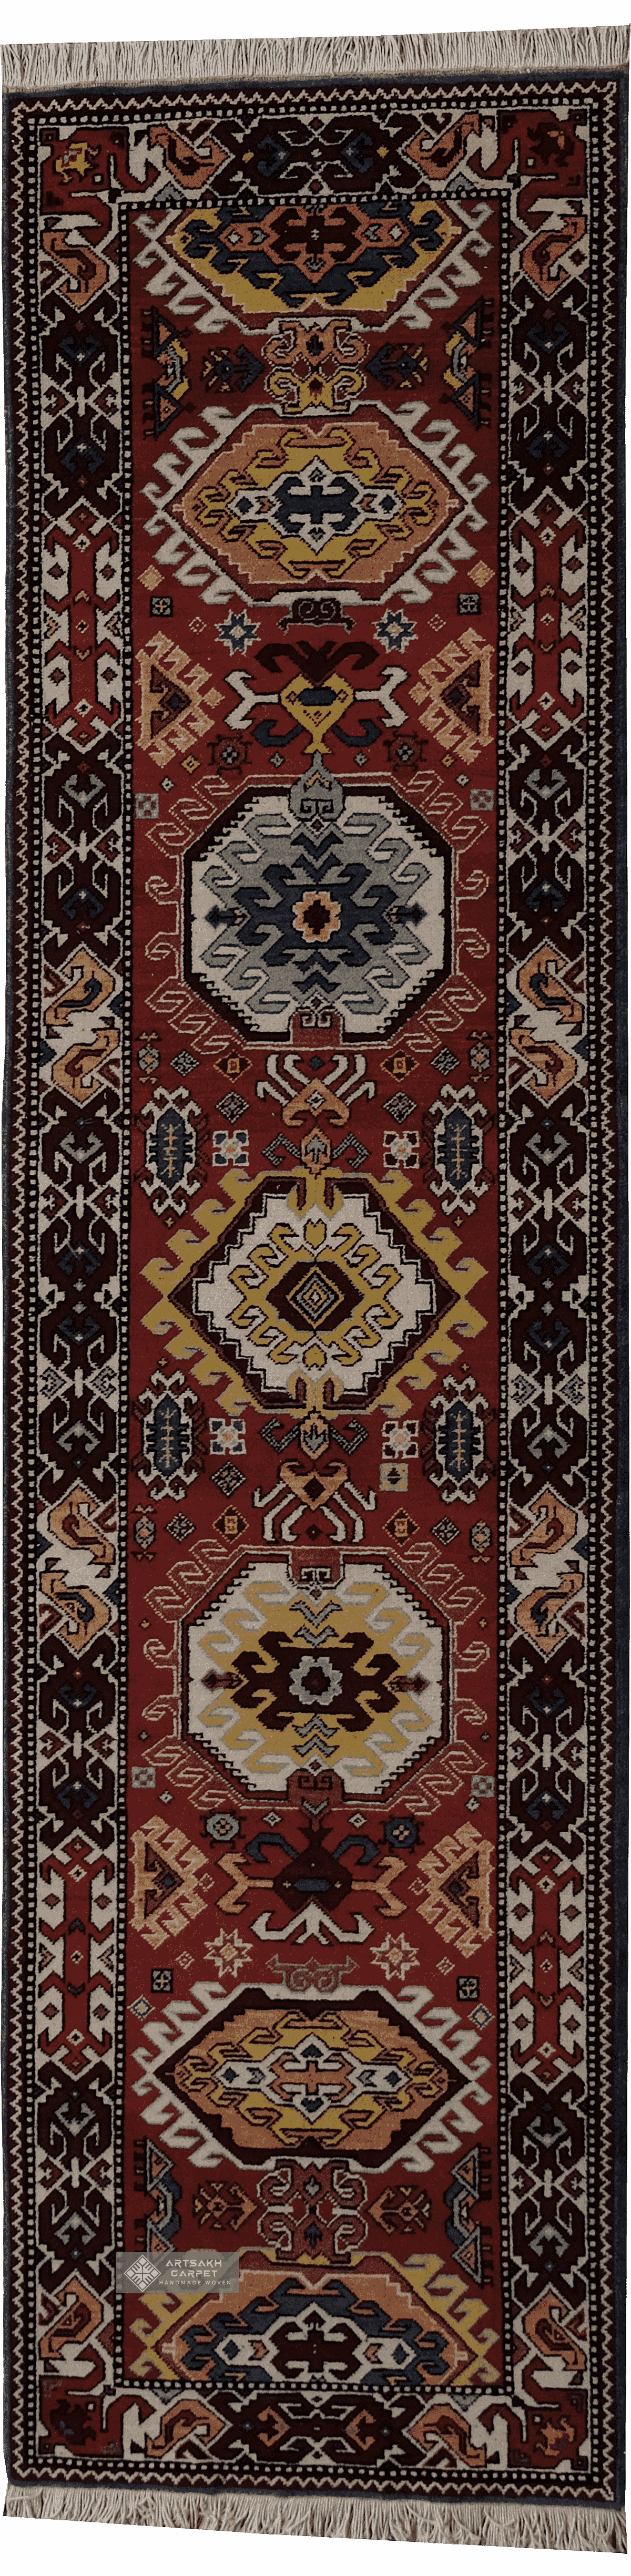 Artsakh Vishapagorg  /  Dragon Carpet Artsakh